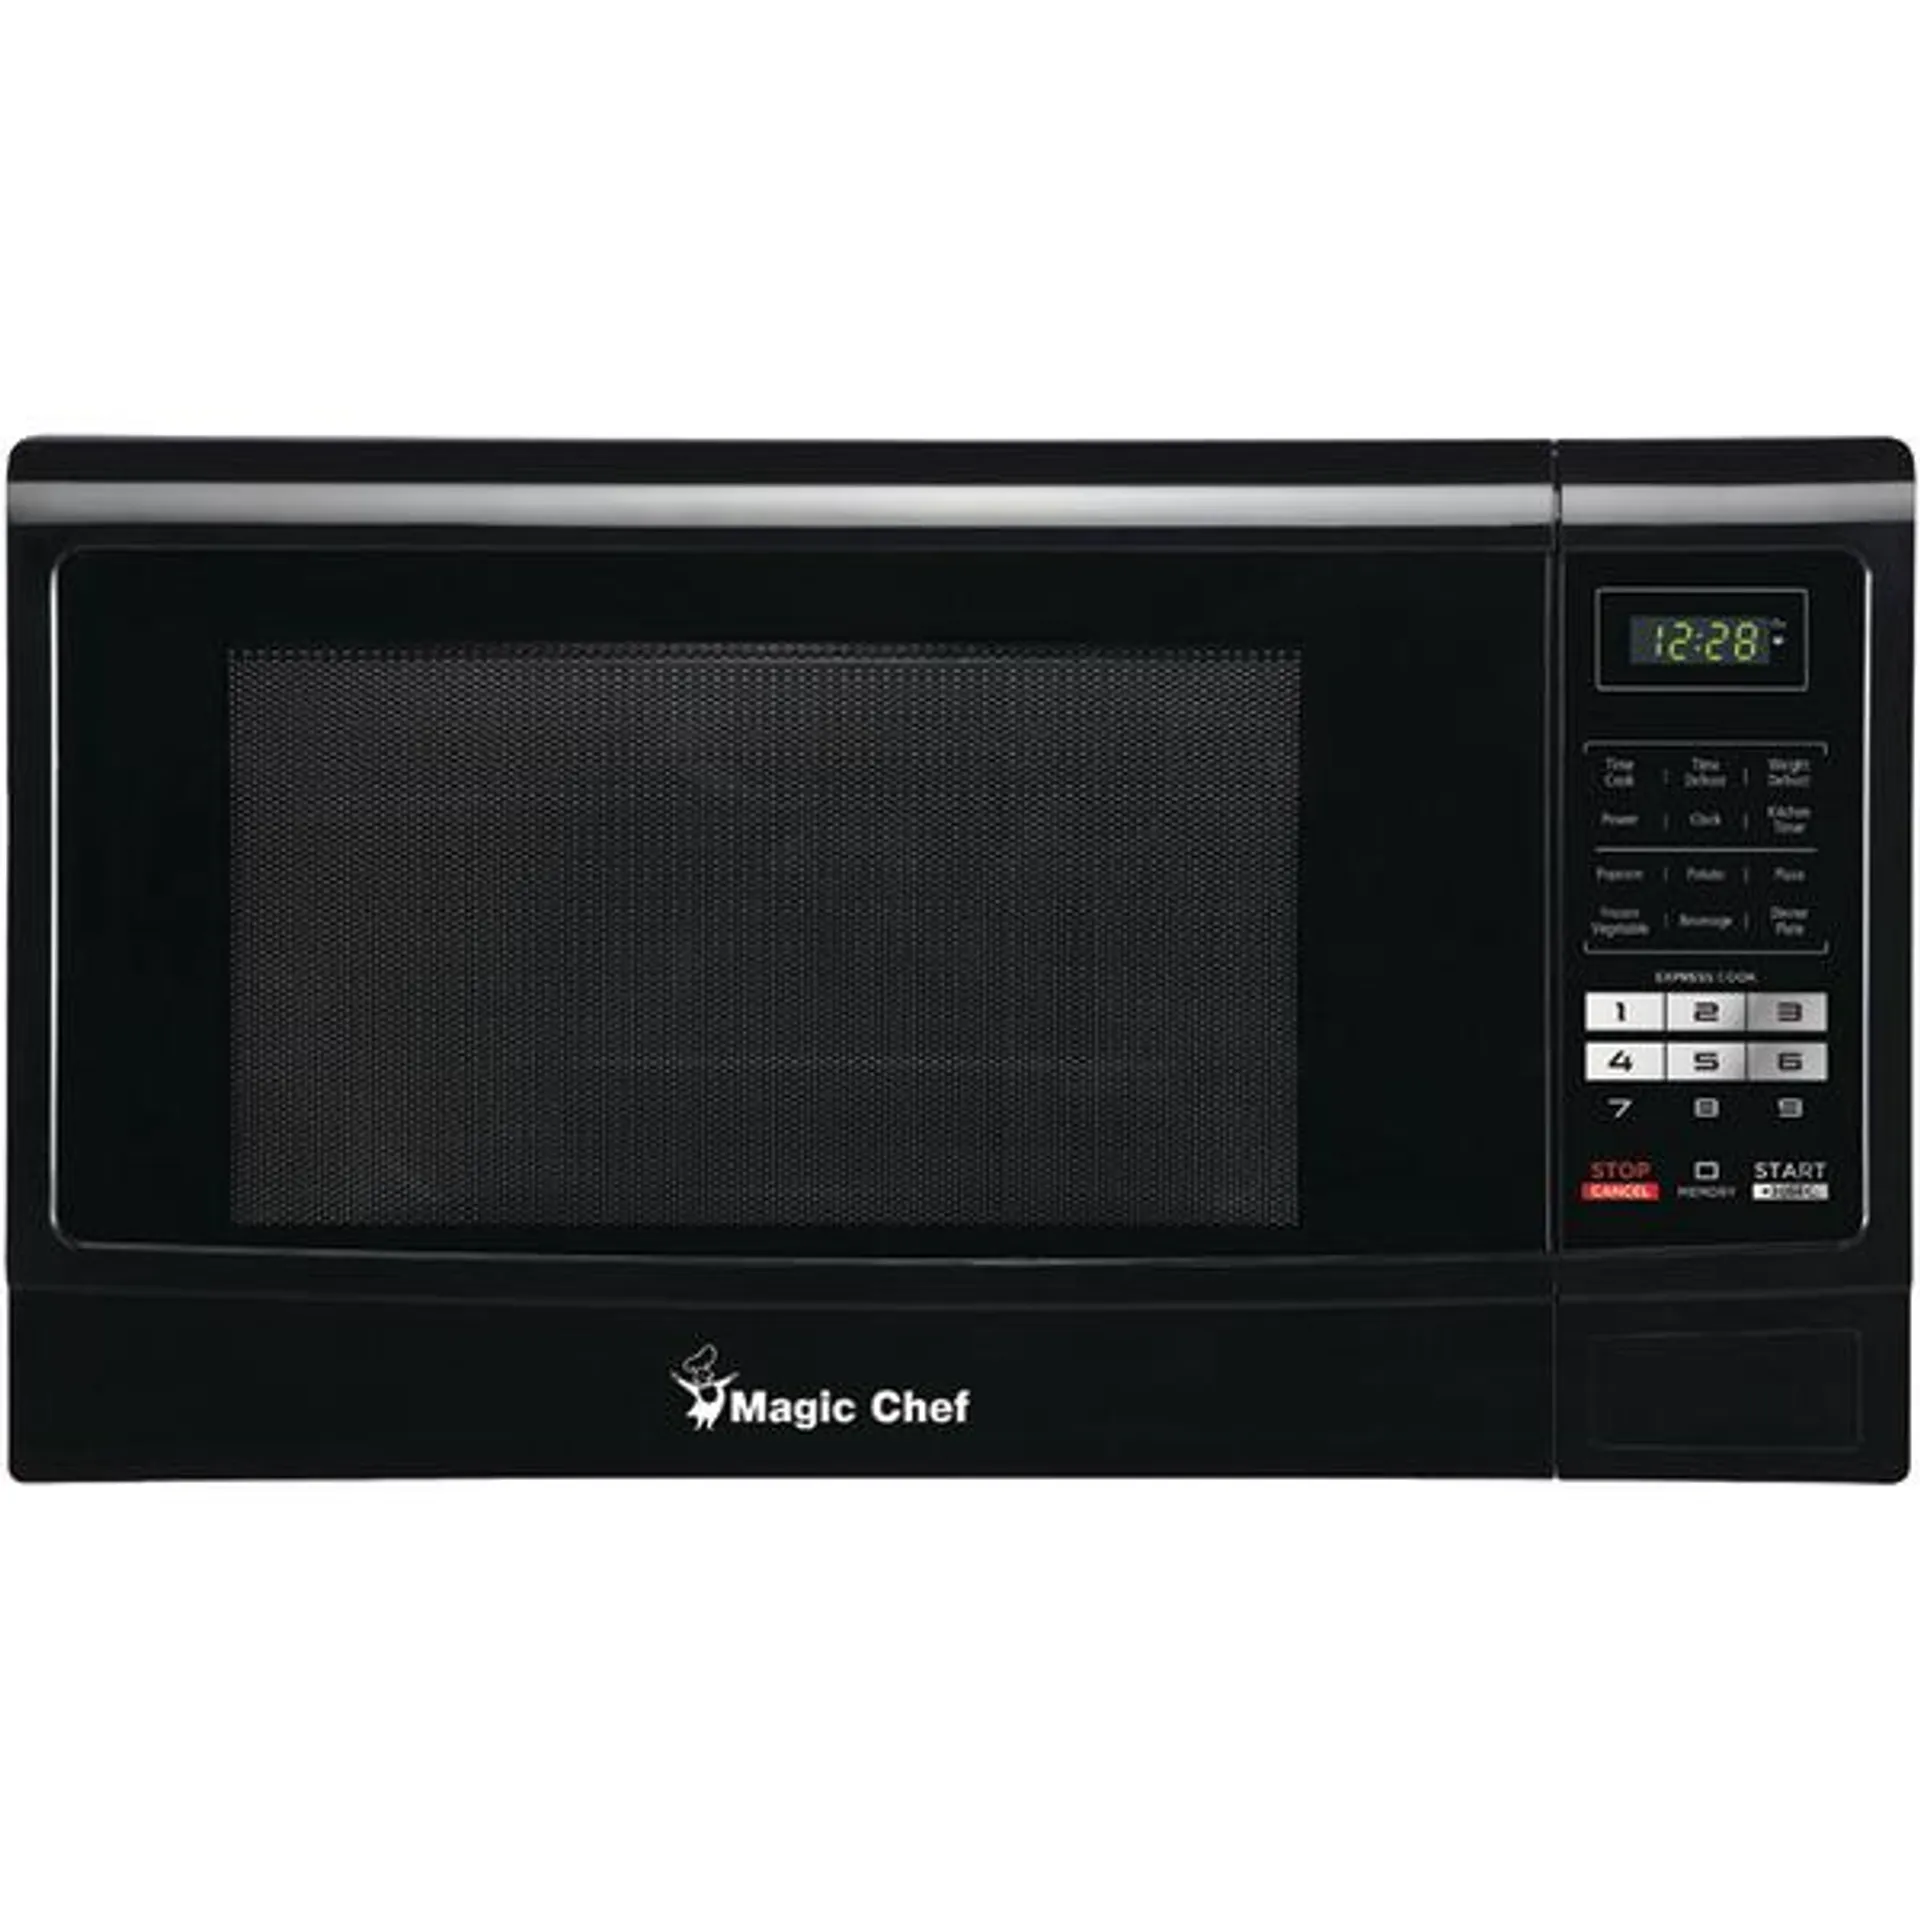 Magic Chef Countertop Microwave, Black - 1.6 Cu ft